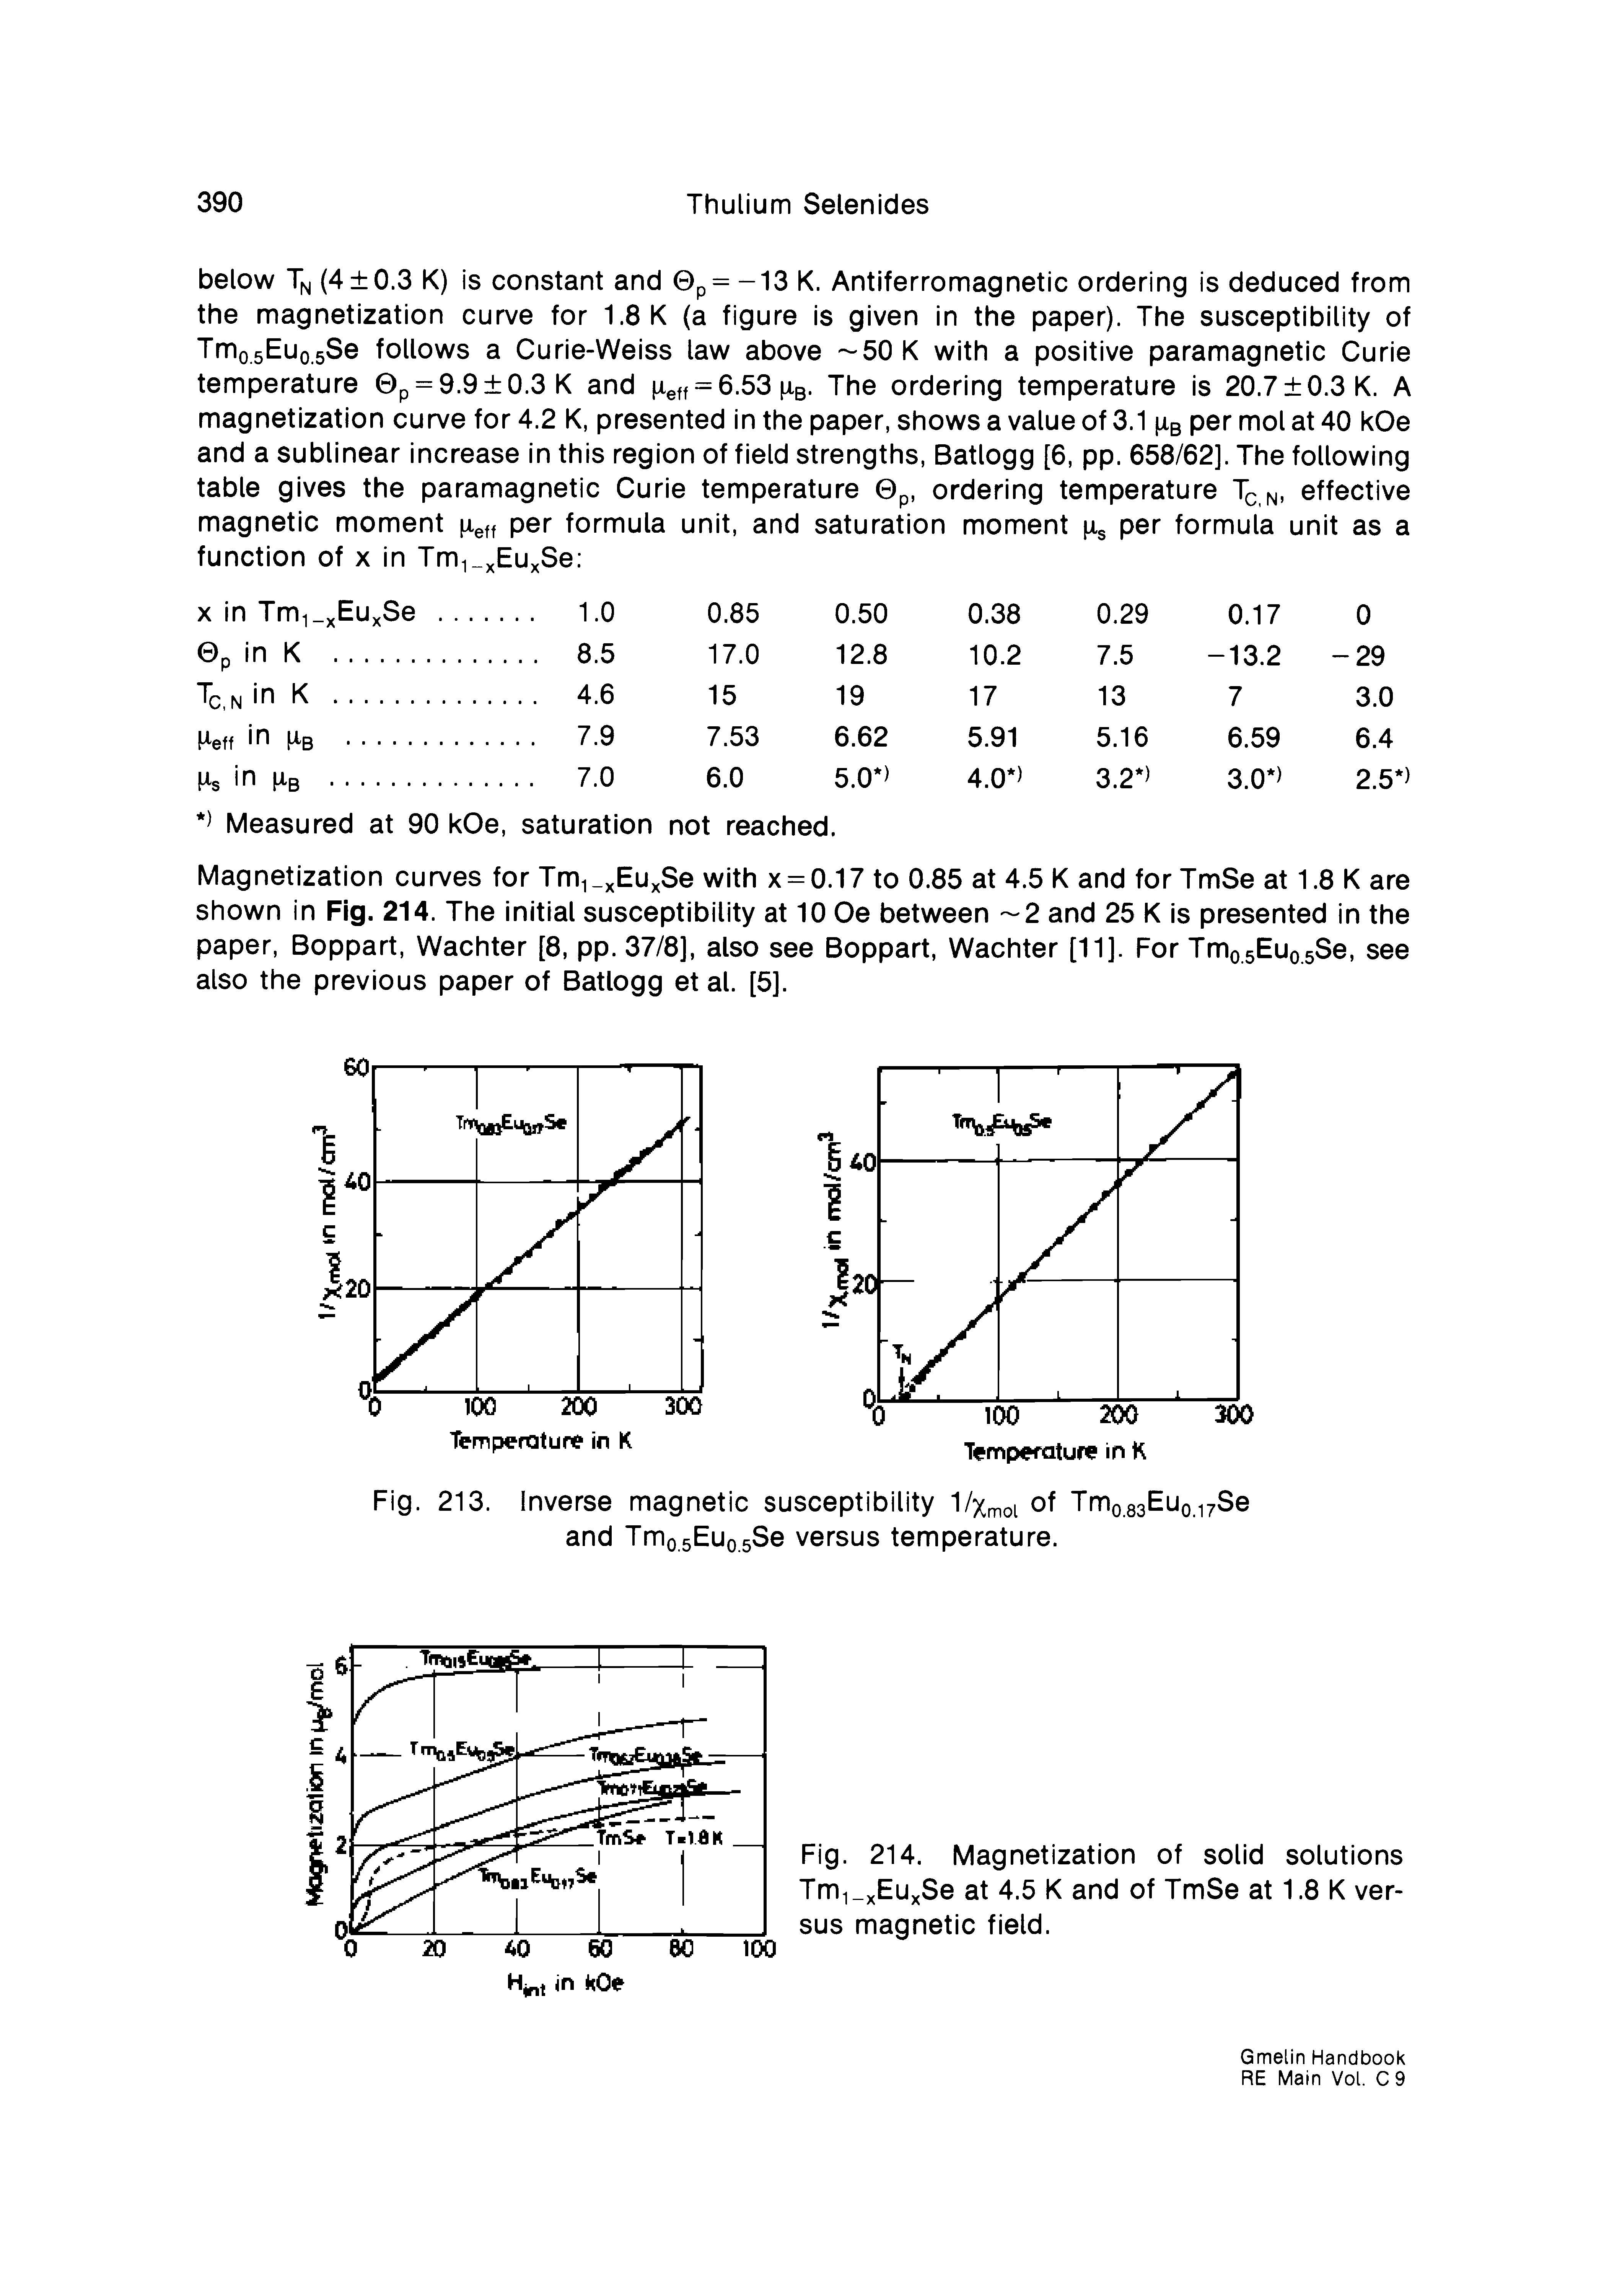 Fig. 213. Inverse magnetic susceptibility 1/Xmoi of Tmo.saEuo, 17 and Tmo.5Euo.5Se versus temperature.